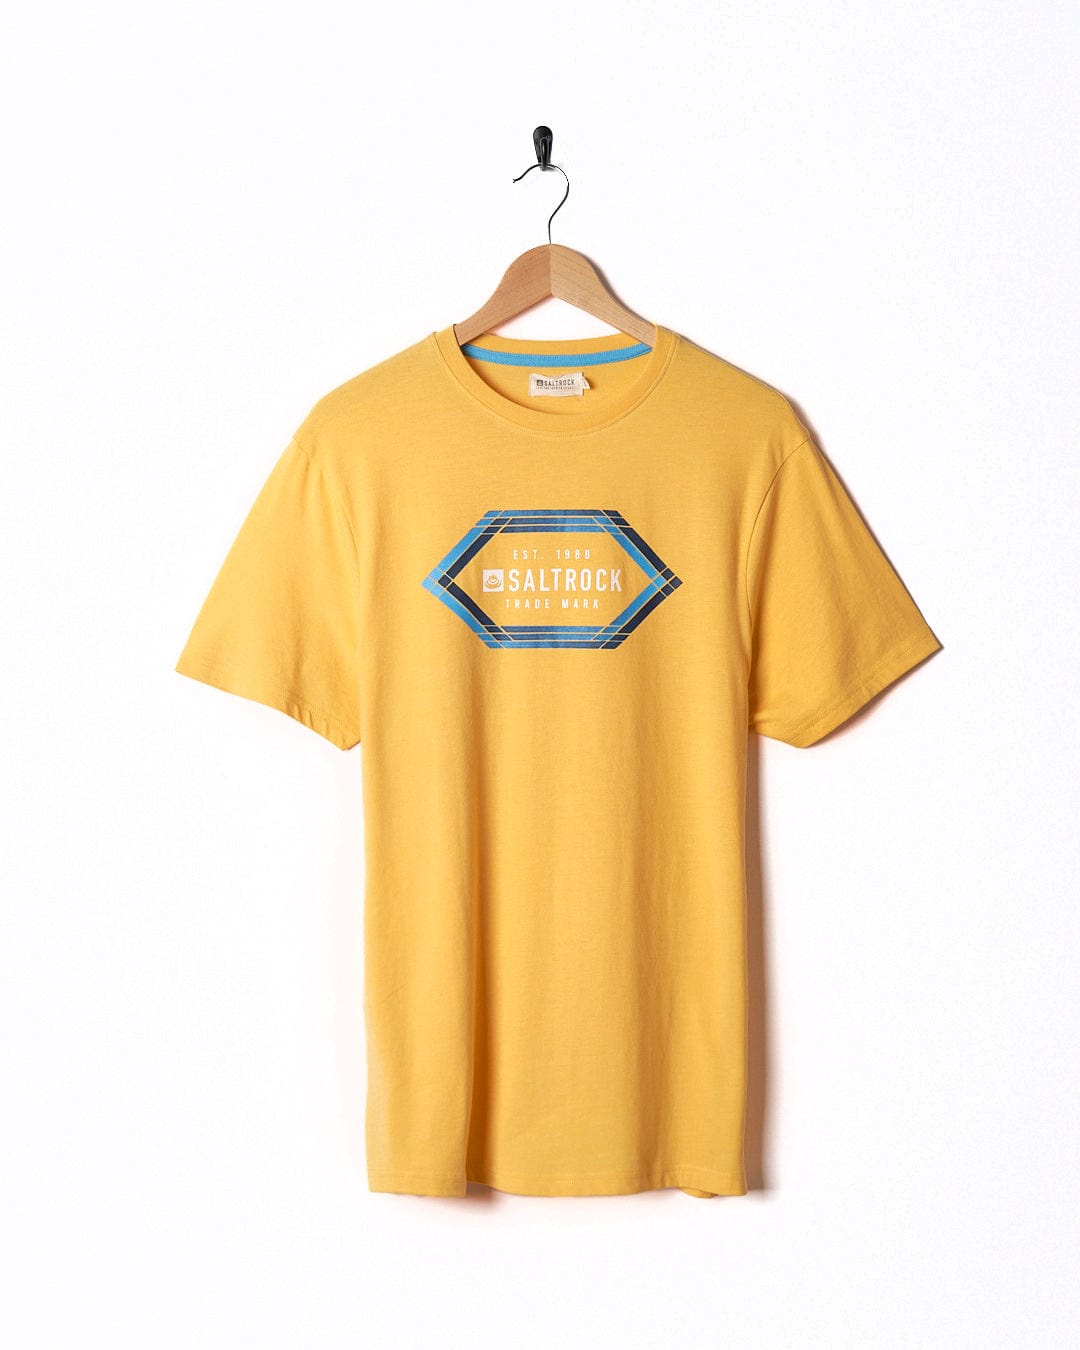 A Saltrock Gradient Hex - Mens Short Sleeve T-Shirt - Yellow hanging on a wall.